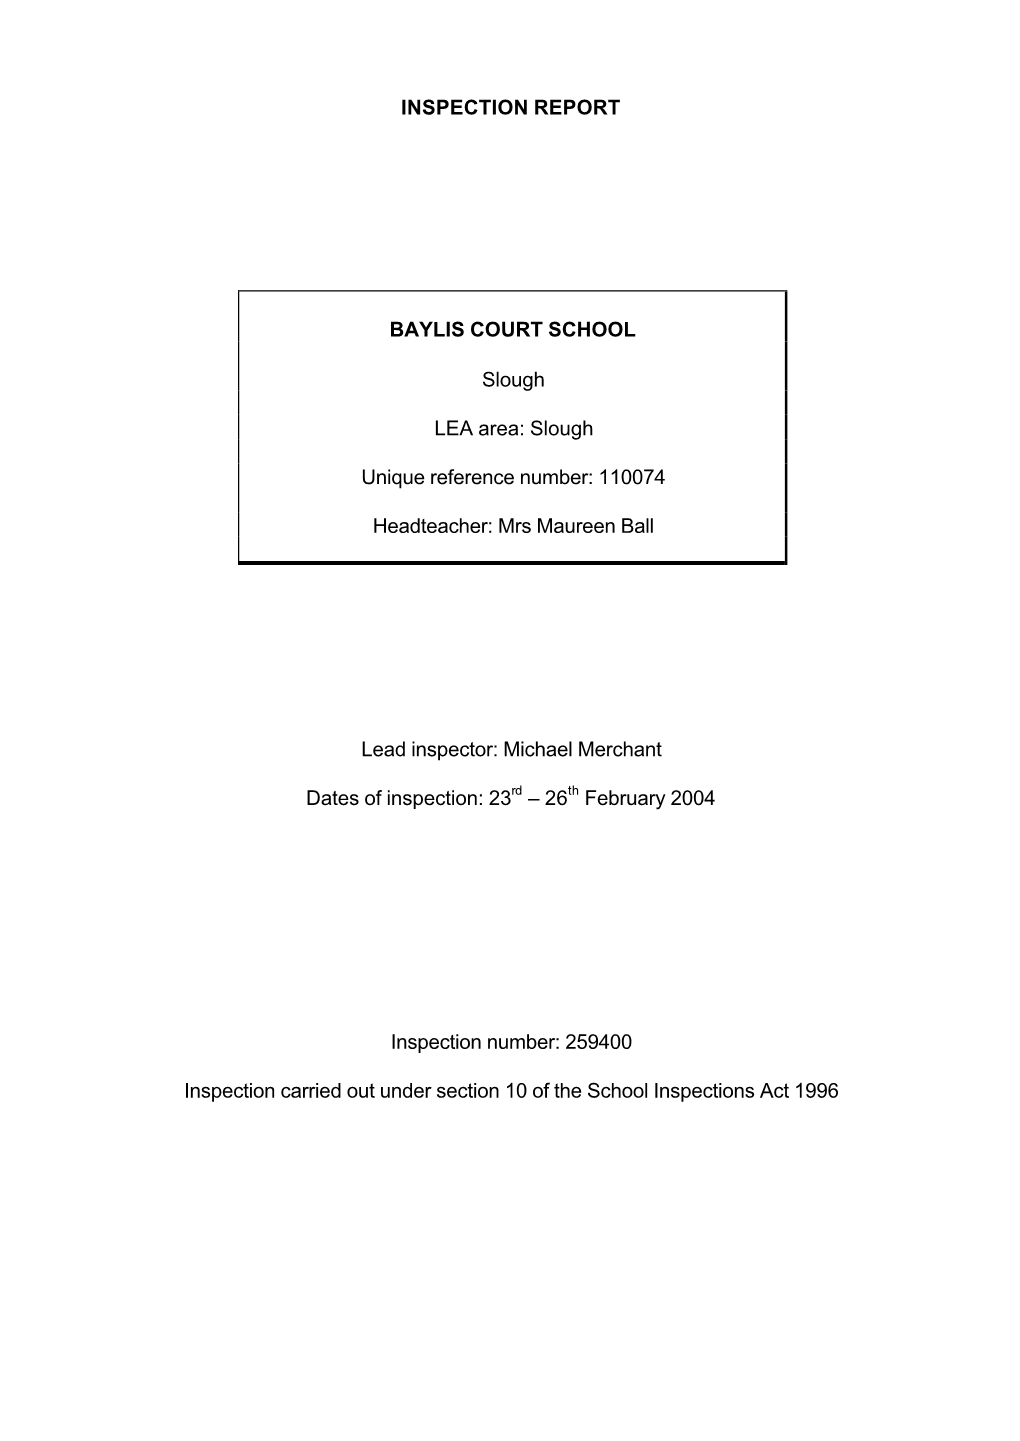 INSPECTION REPORT BAYLIS COURT SCHOOL Slough LEA Area